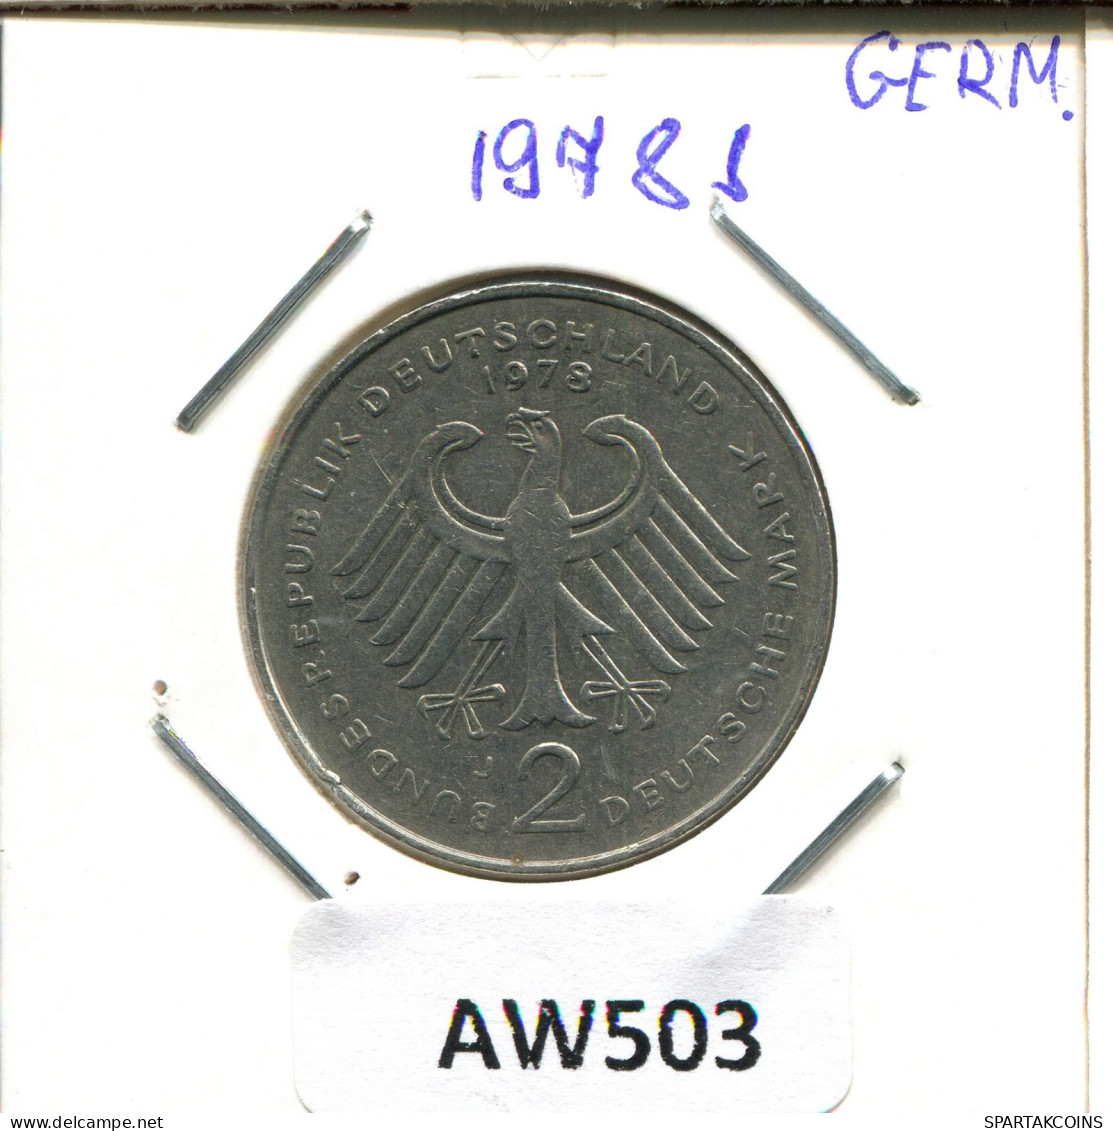 2 DM 1978 J T.HEUSS BRD ALEMANIA Moneda GERMANY #AW503.E.A - 2 Mark